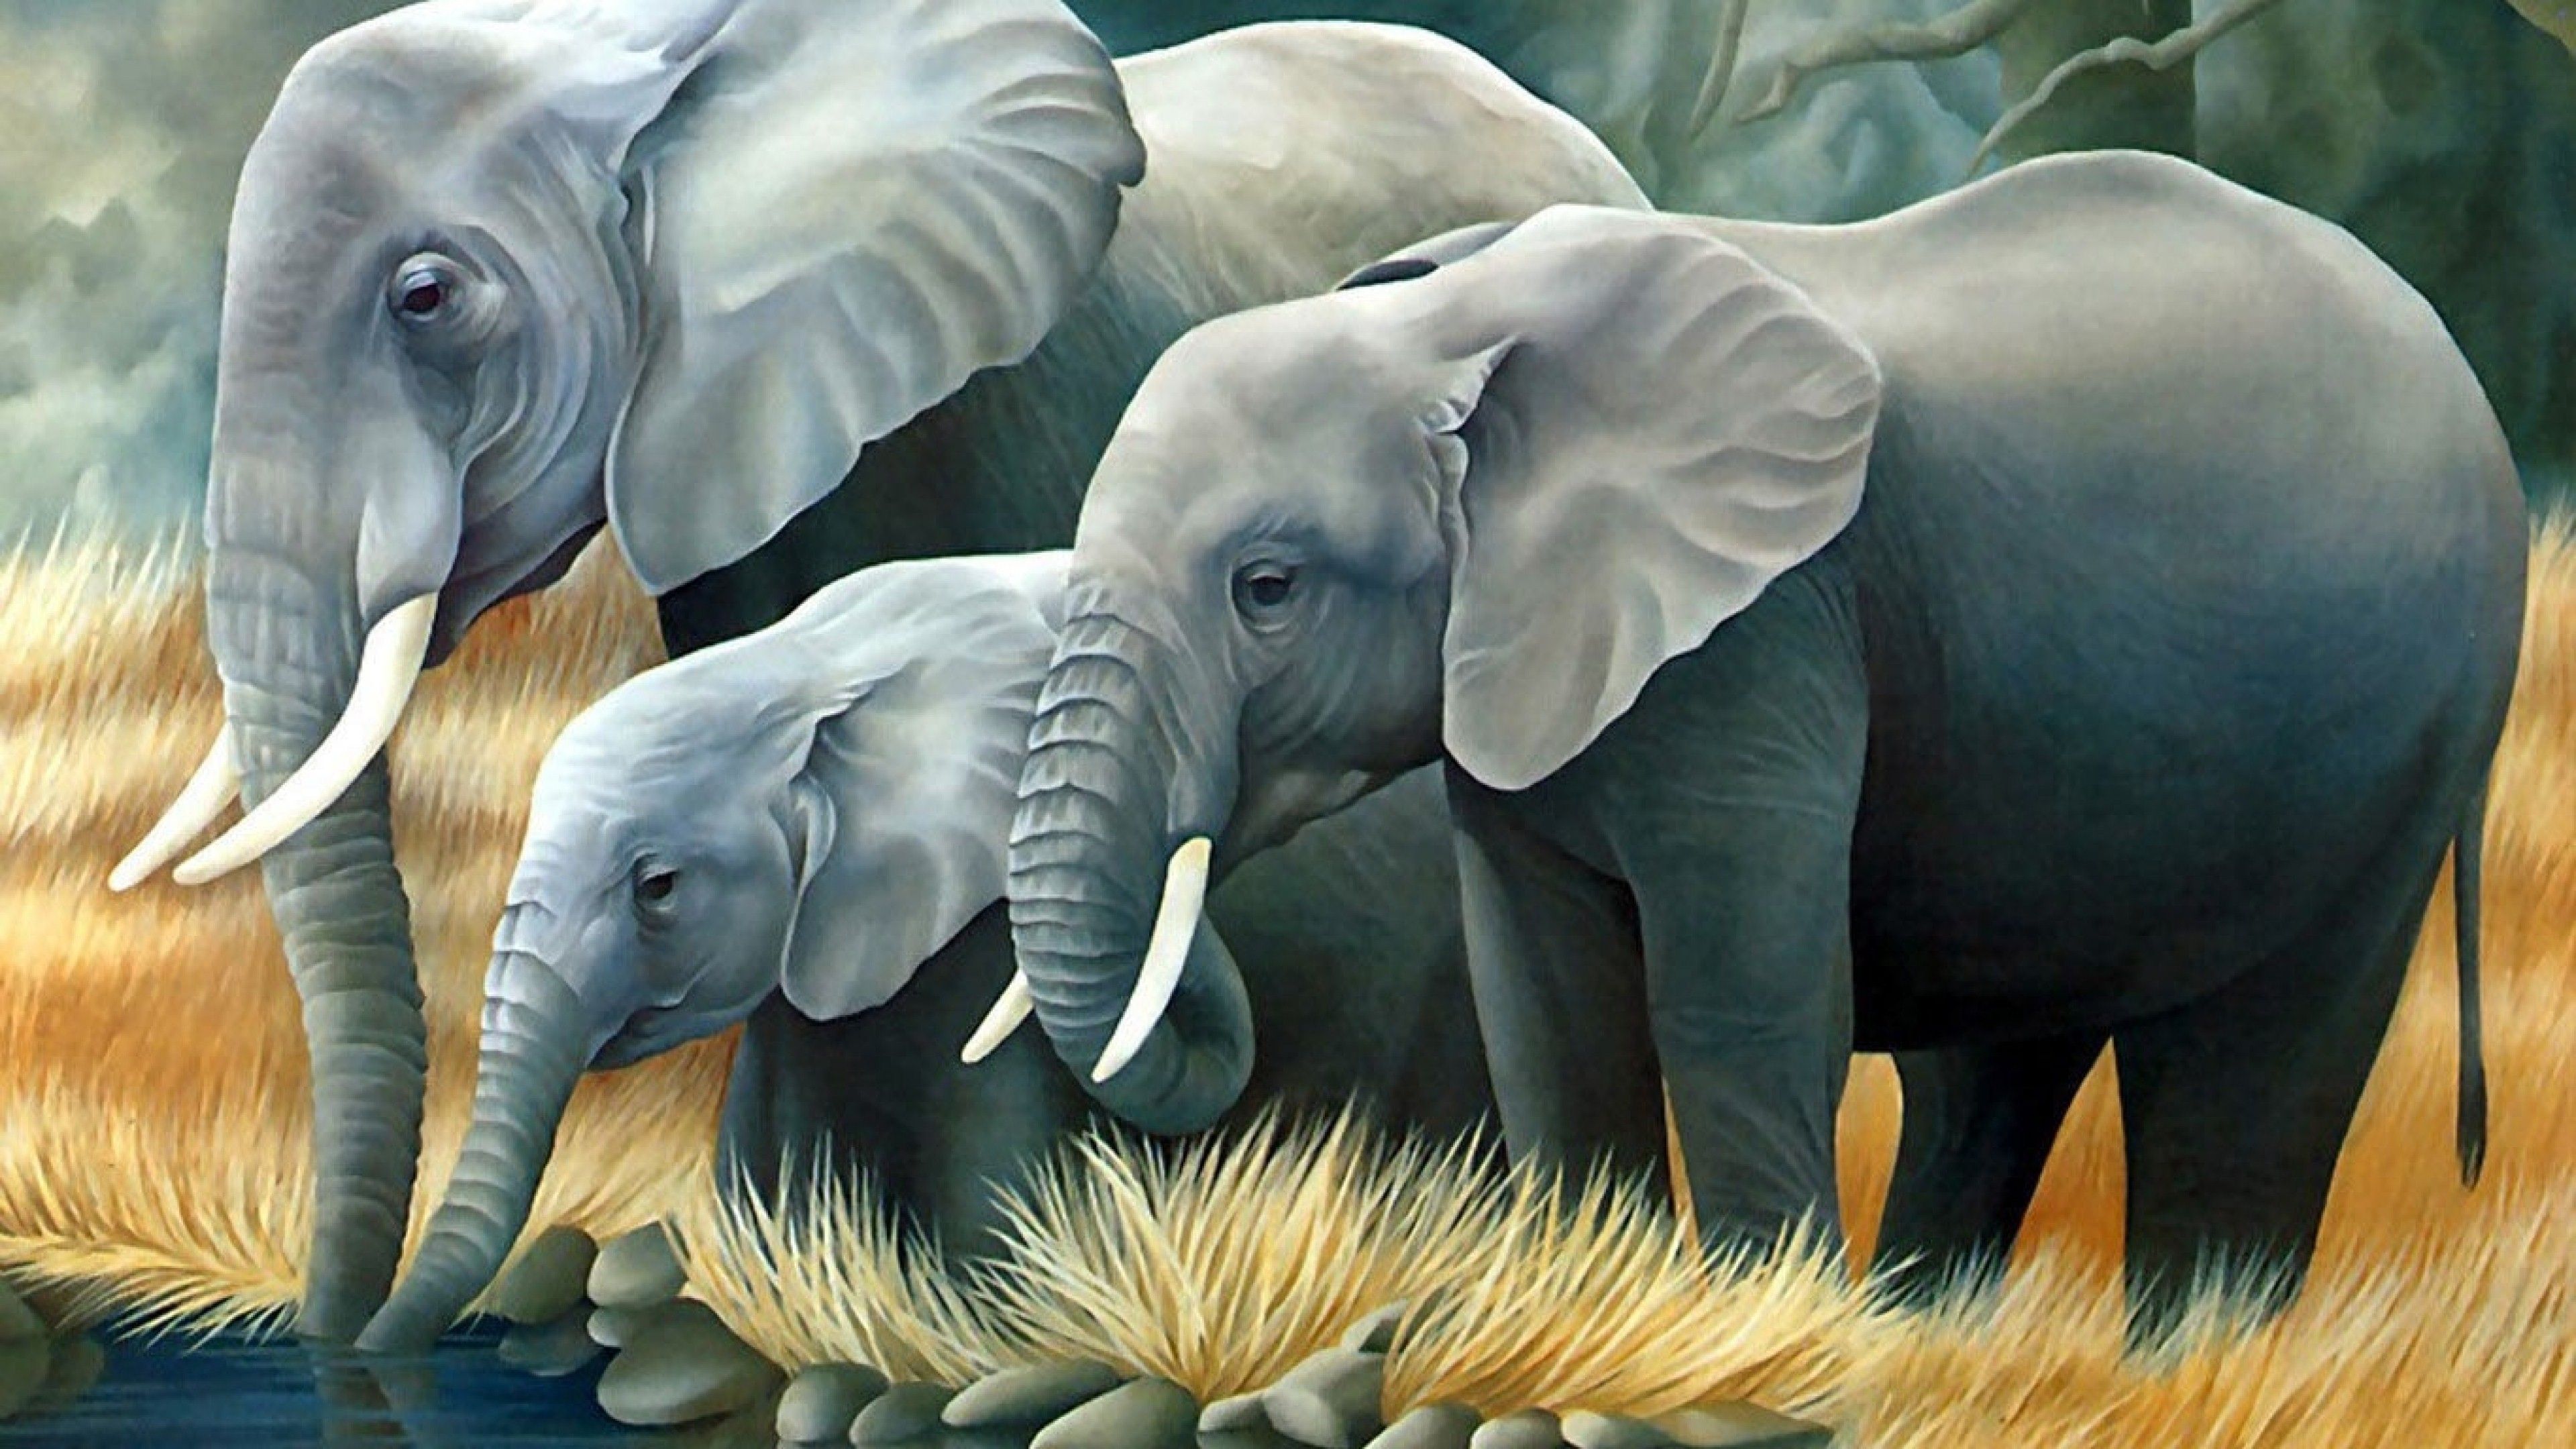 beibehang Custom Photo Wallpaper Mural Wall Sticker Extremely Beautiful  Animal World Elephant Giraffe 3D Landscape Painting